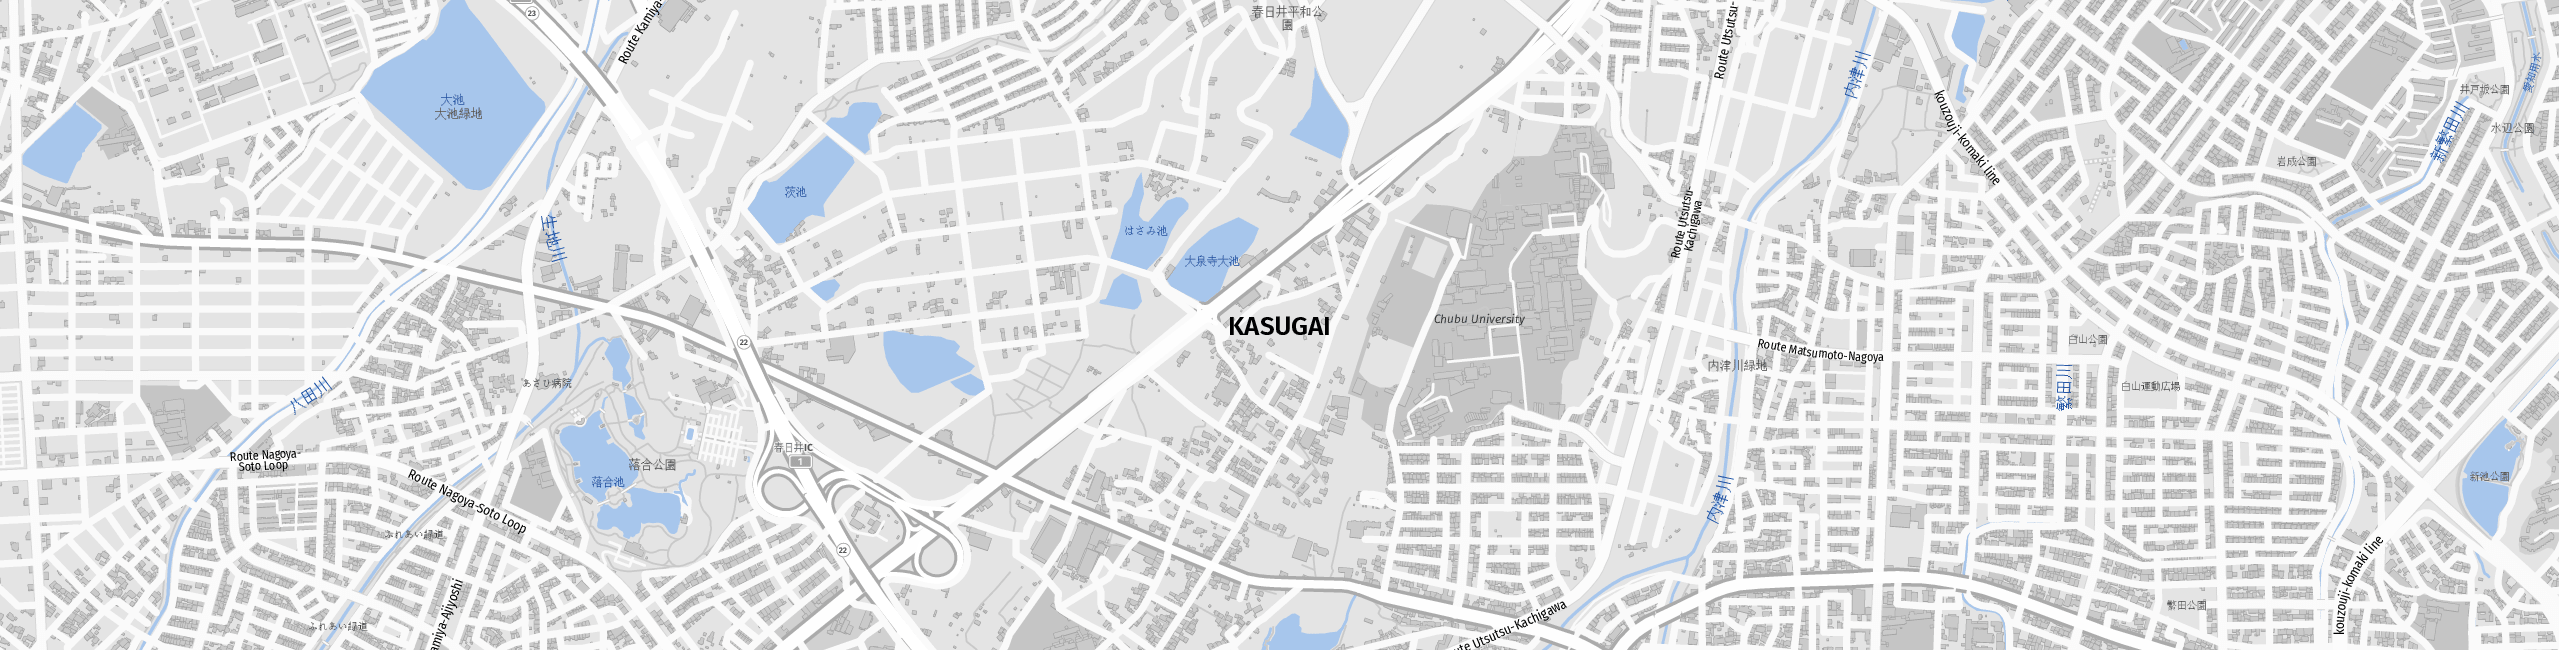 Stadtplan Kasugai zum Downloaden.